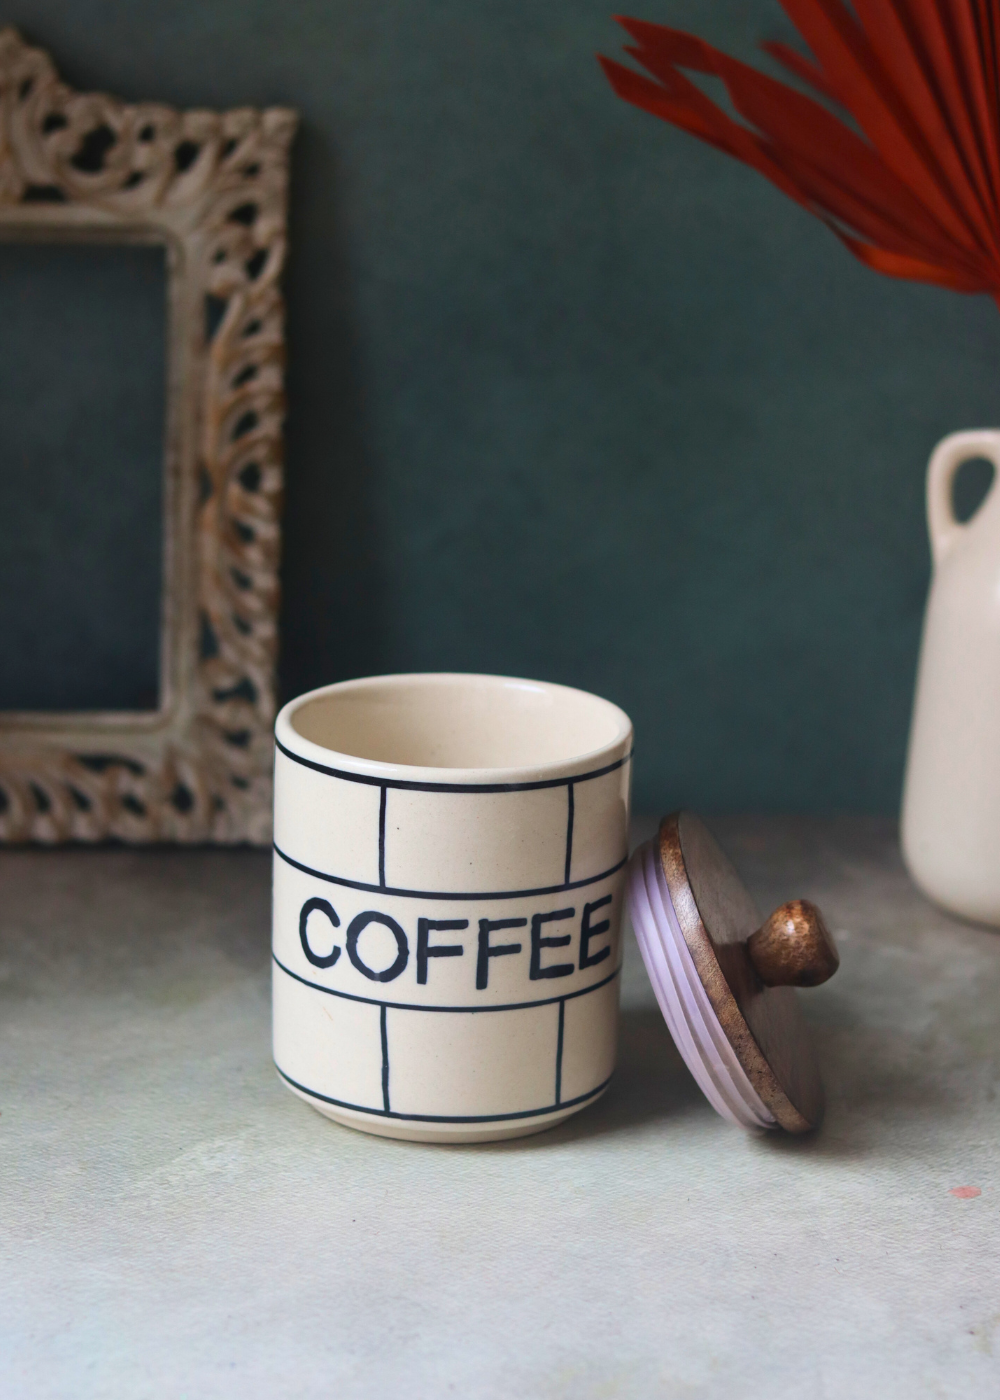  Handmade ceramic coffee jar with wooden lid